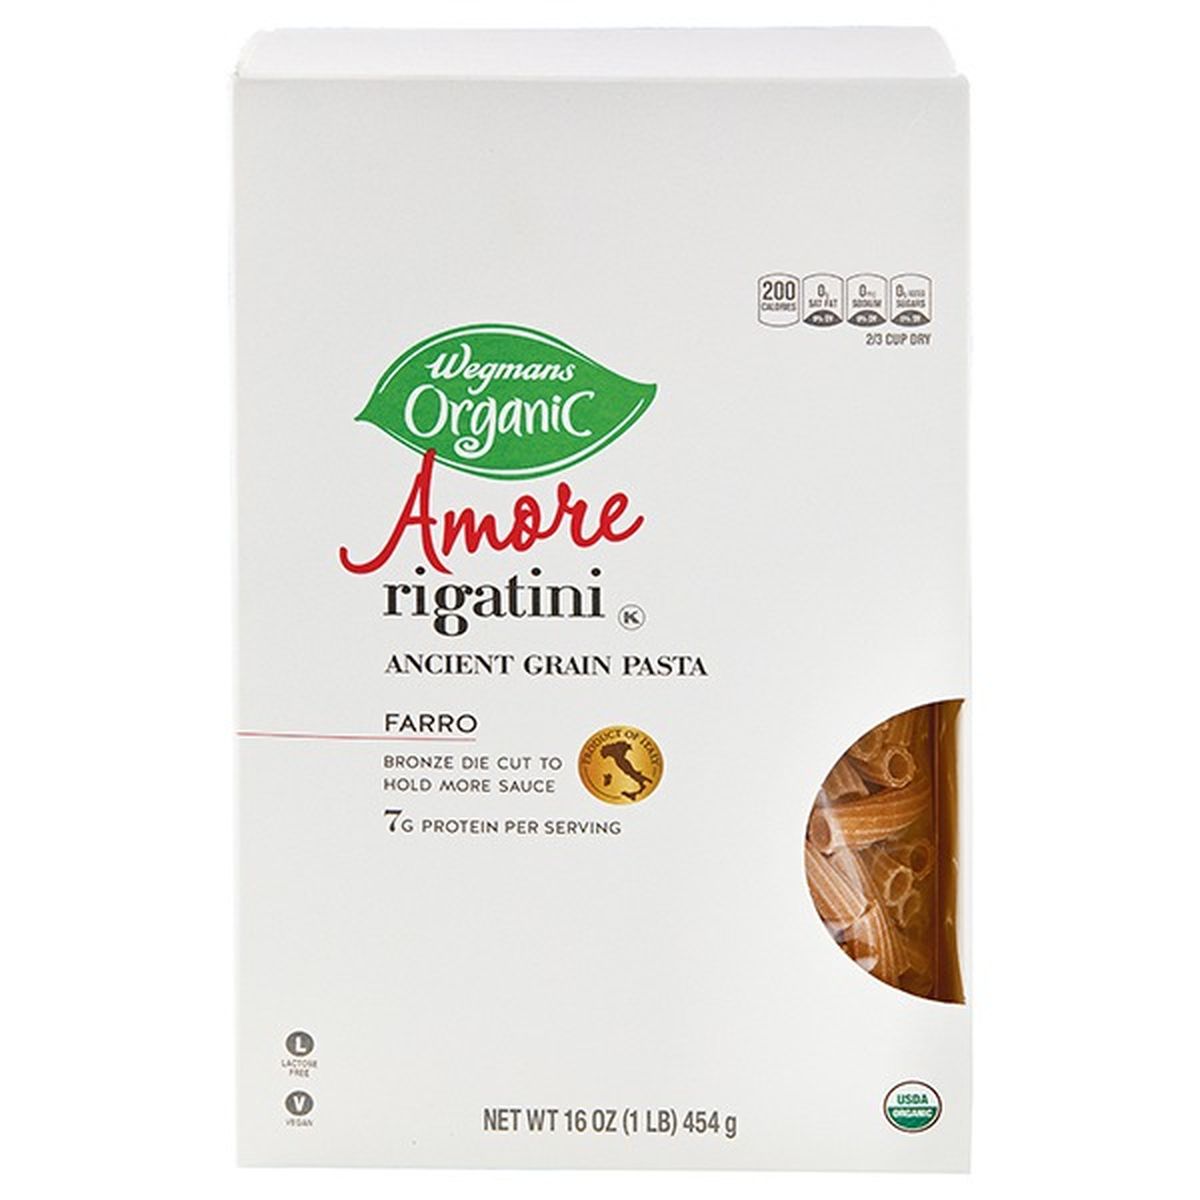 Calories in Wegmans Organic Amore Rigatini, Ancient Grain Pasta, Farro